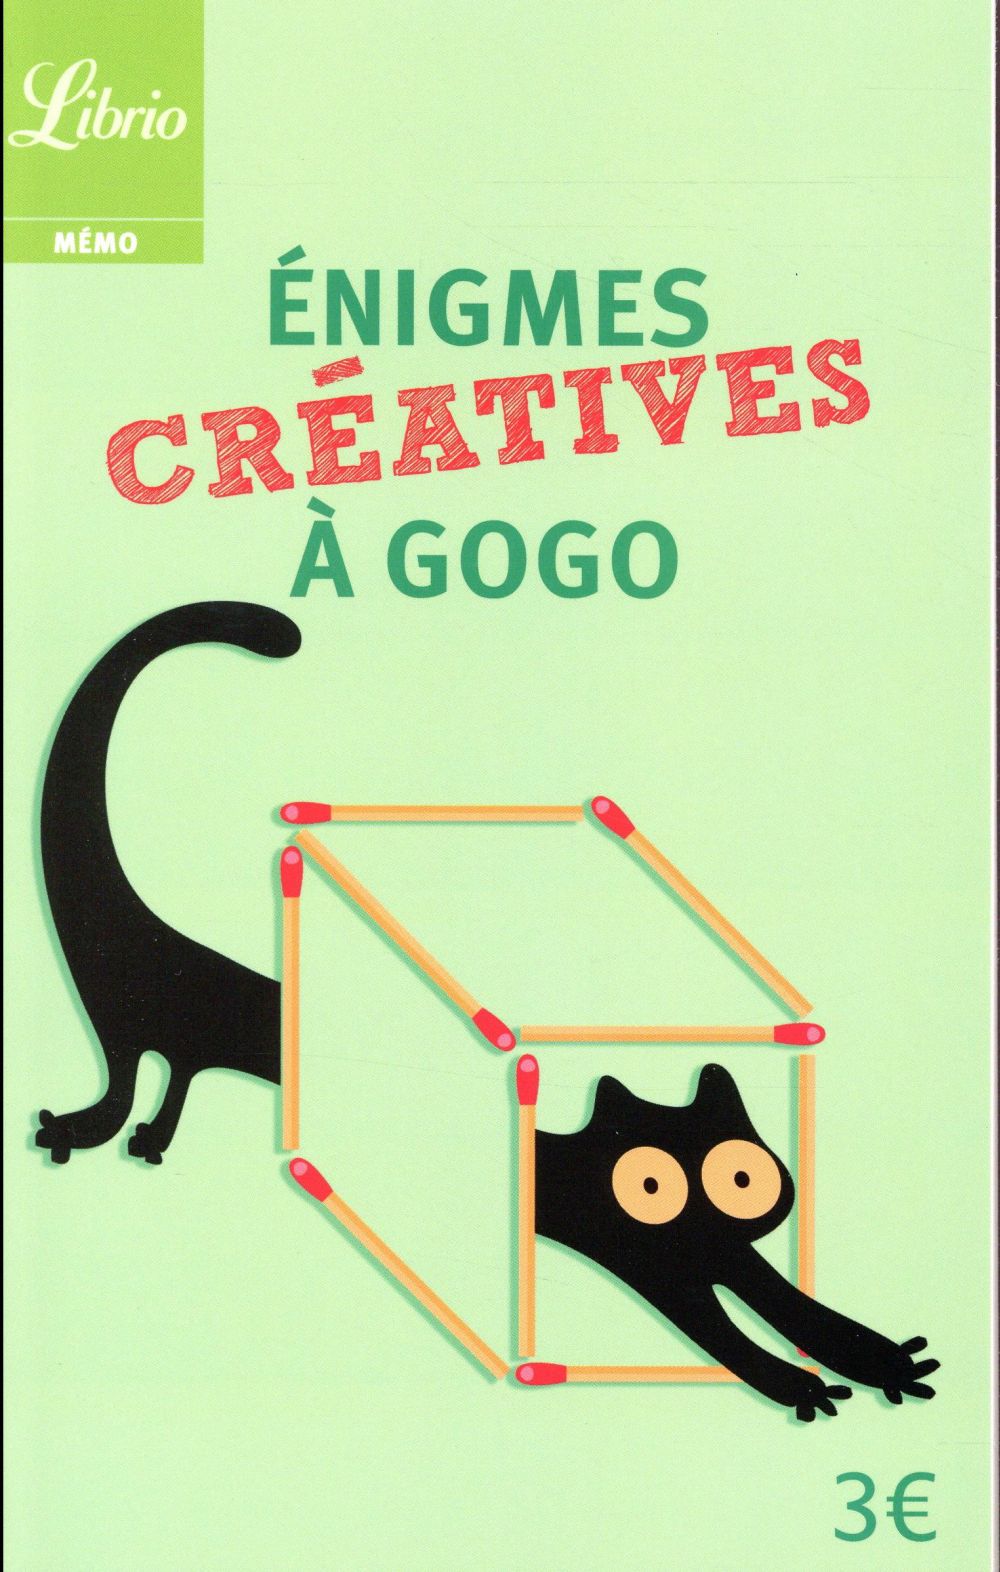 ENIGMES CREATIVES A GOGO